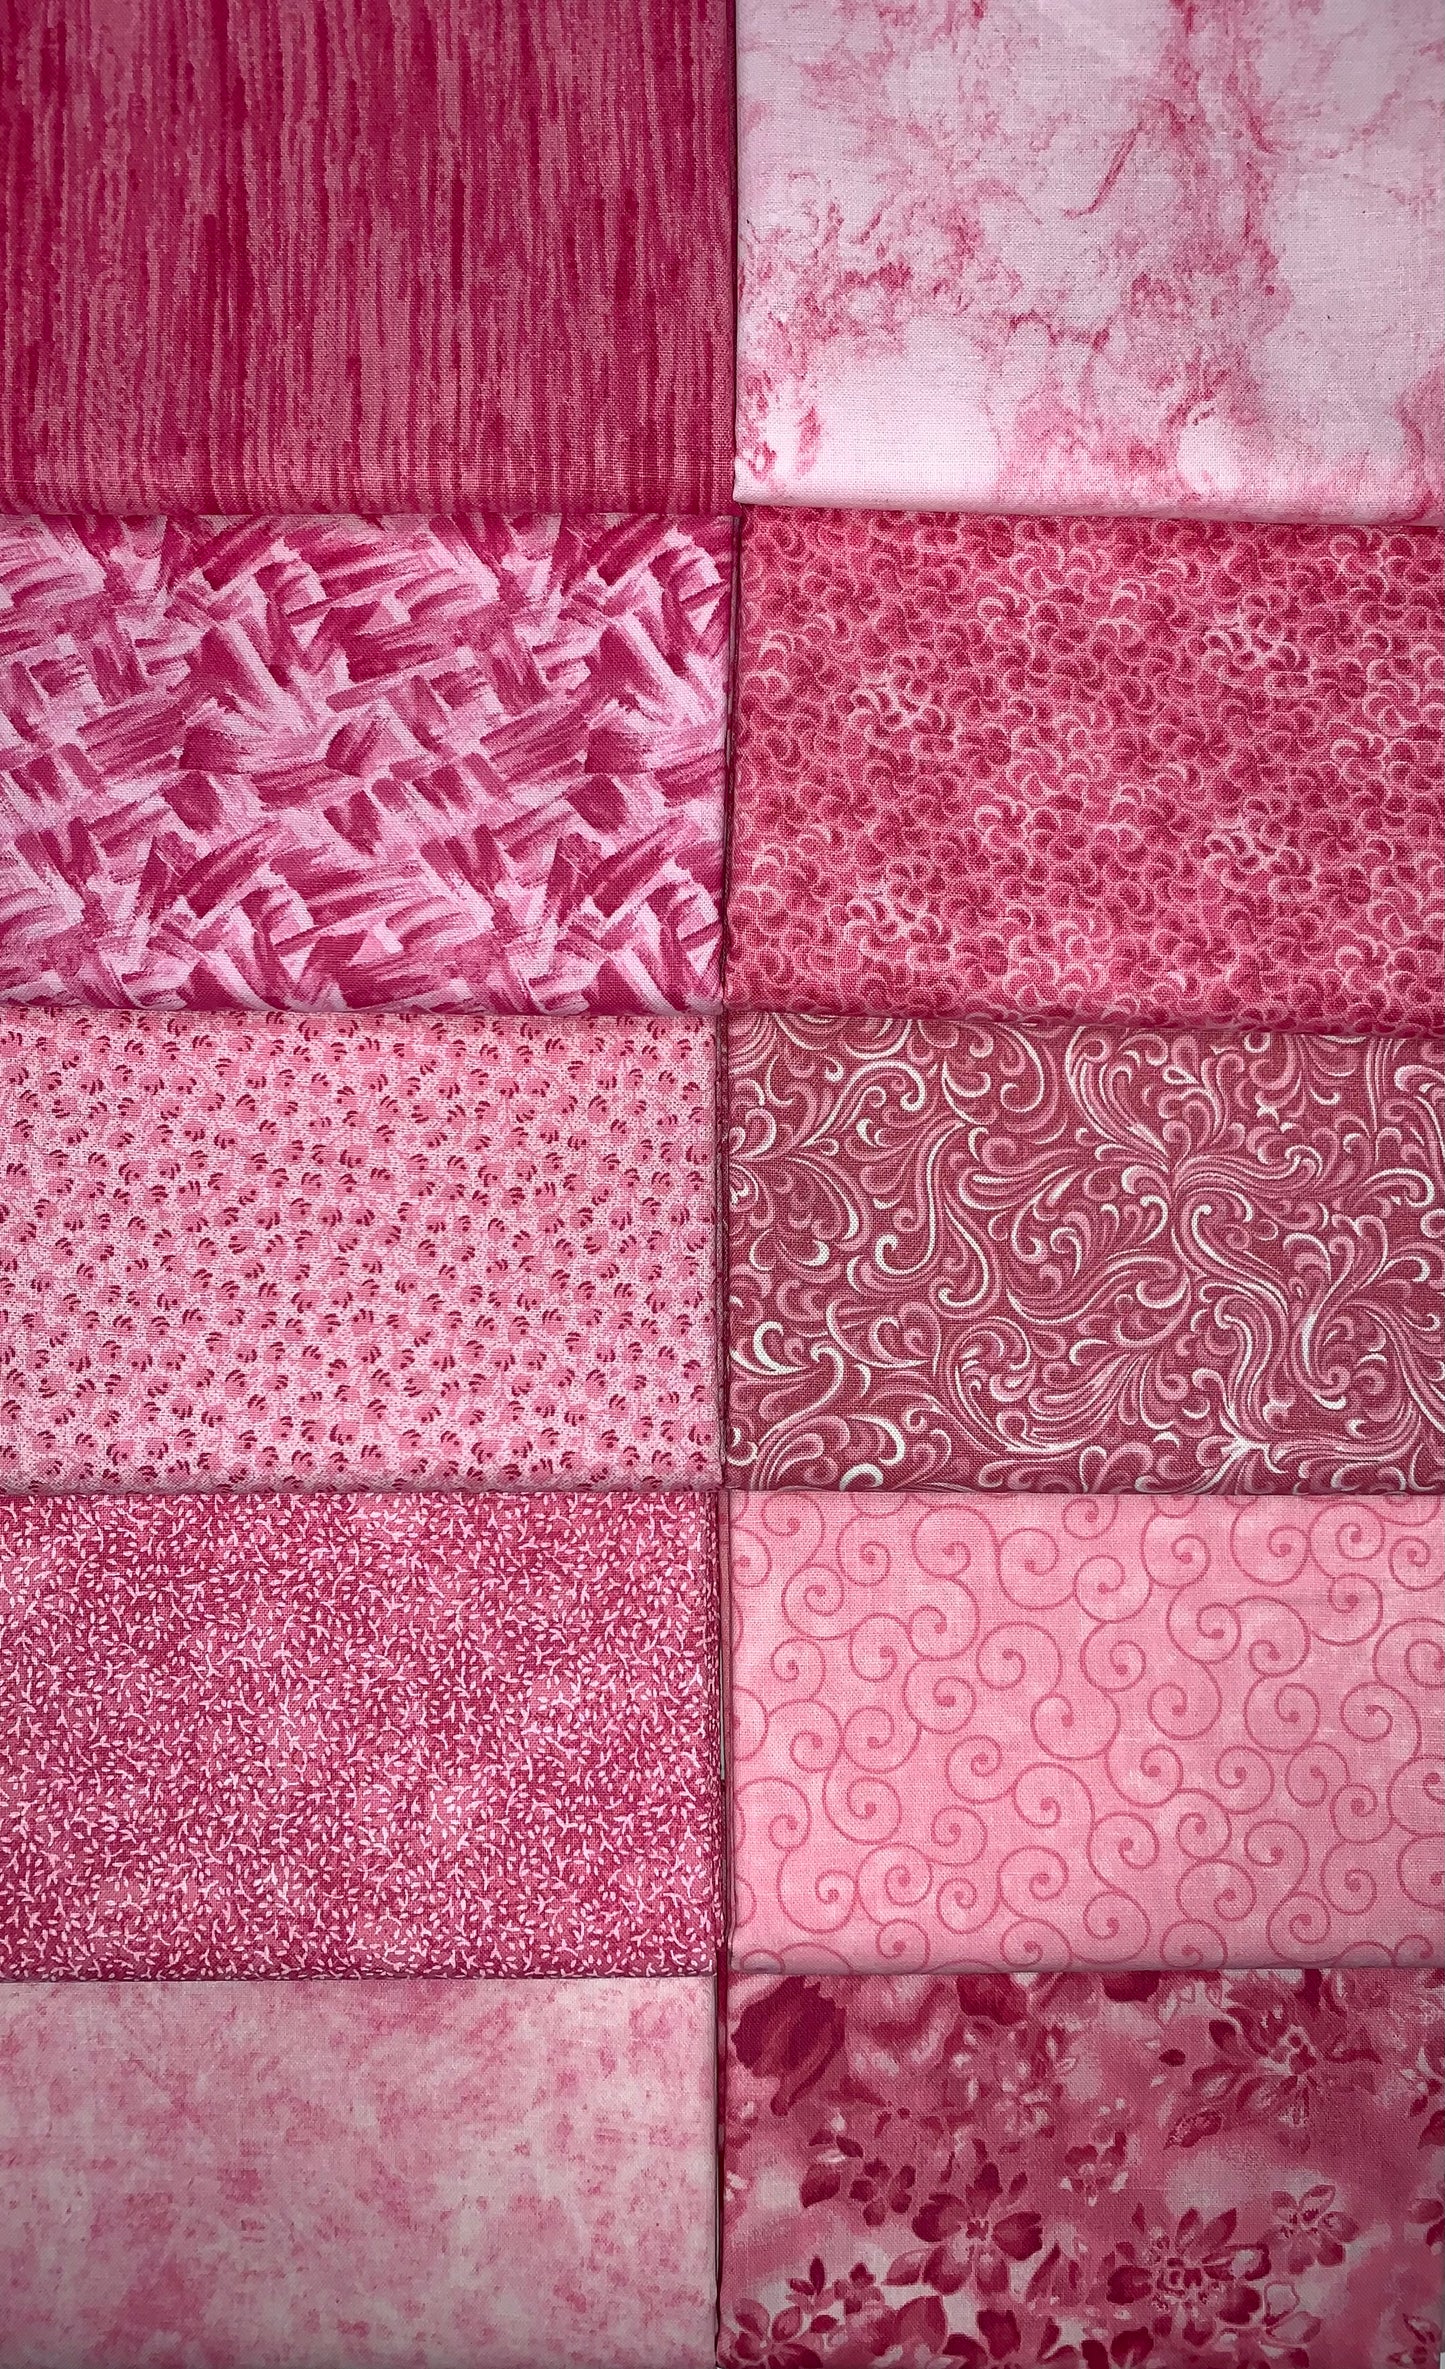 Basic Colors - Pink Half-Yard Bundle - 10 Fabrics, 5 Total Yards